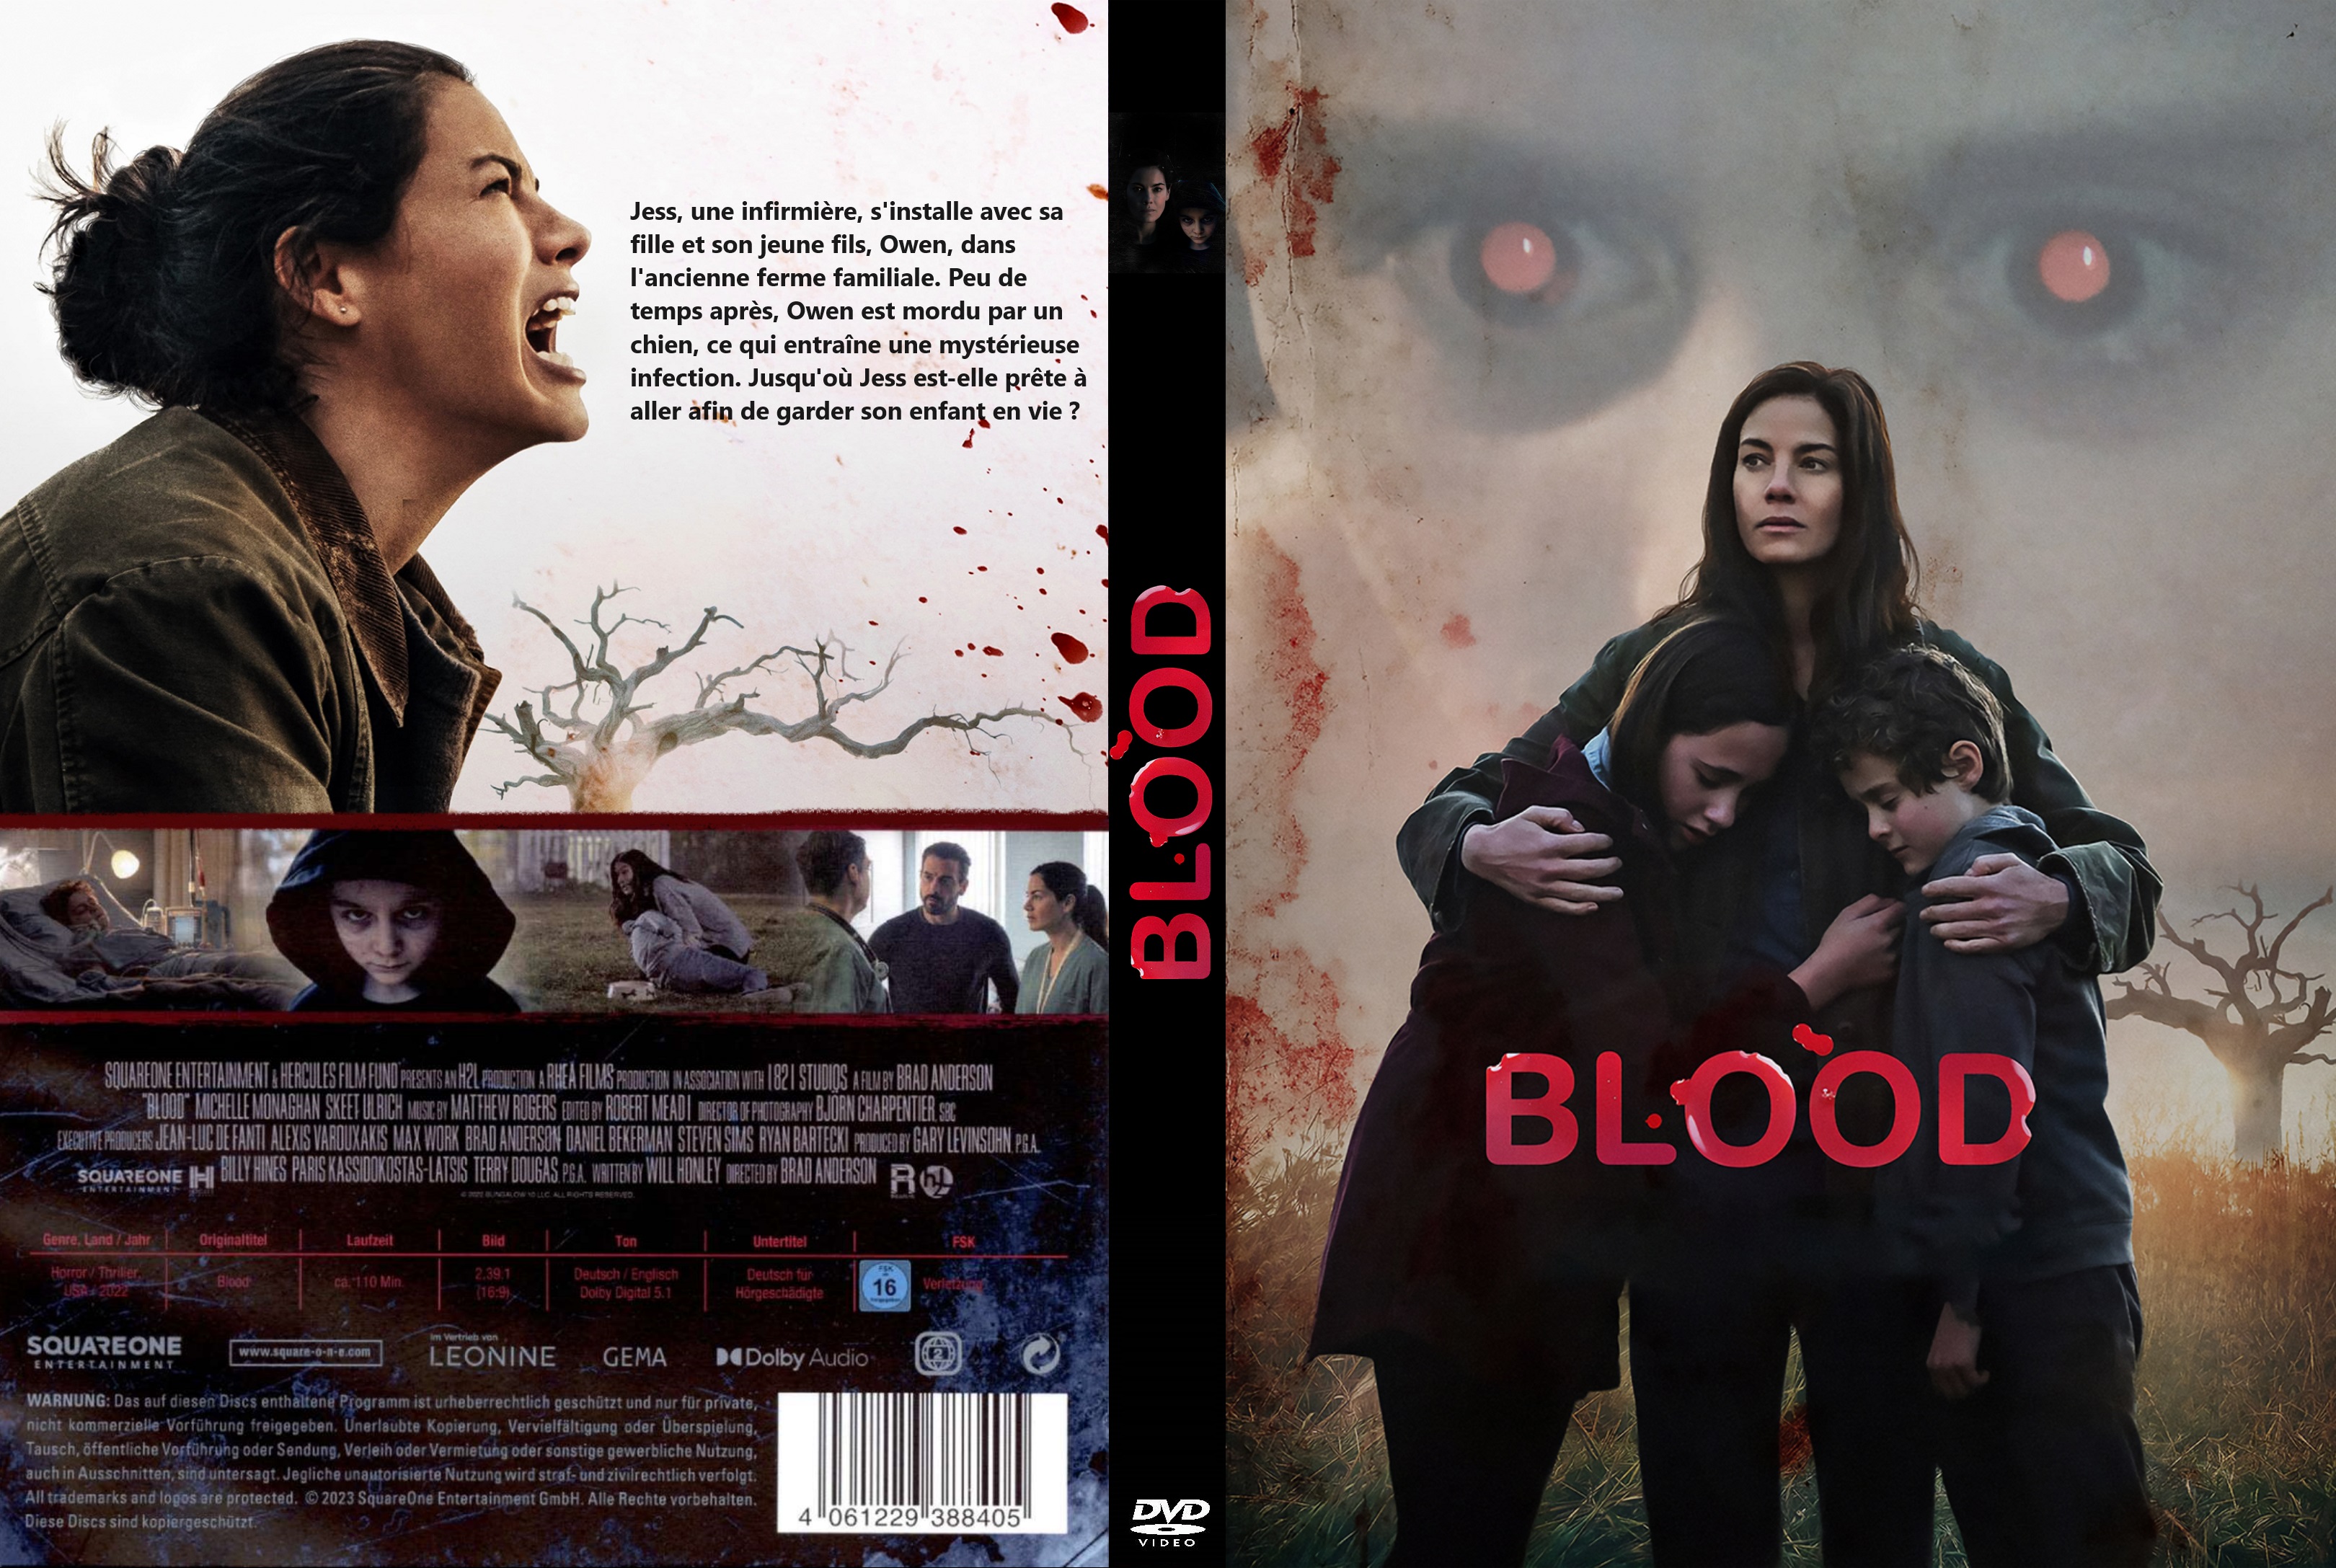 Jaquette DVD Blood 2023 custom